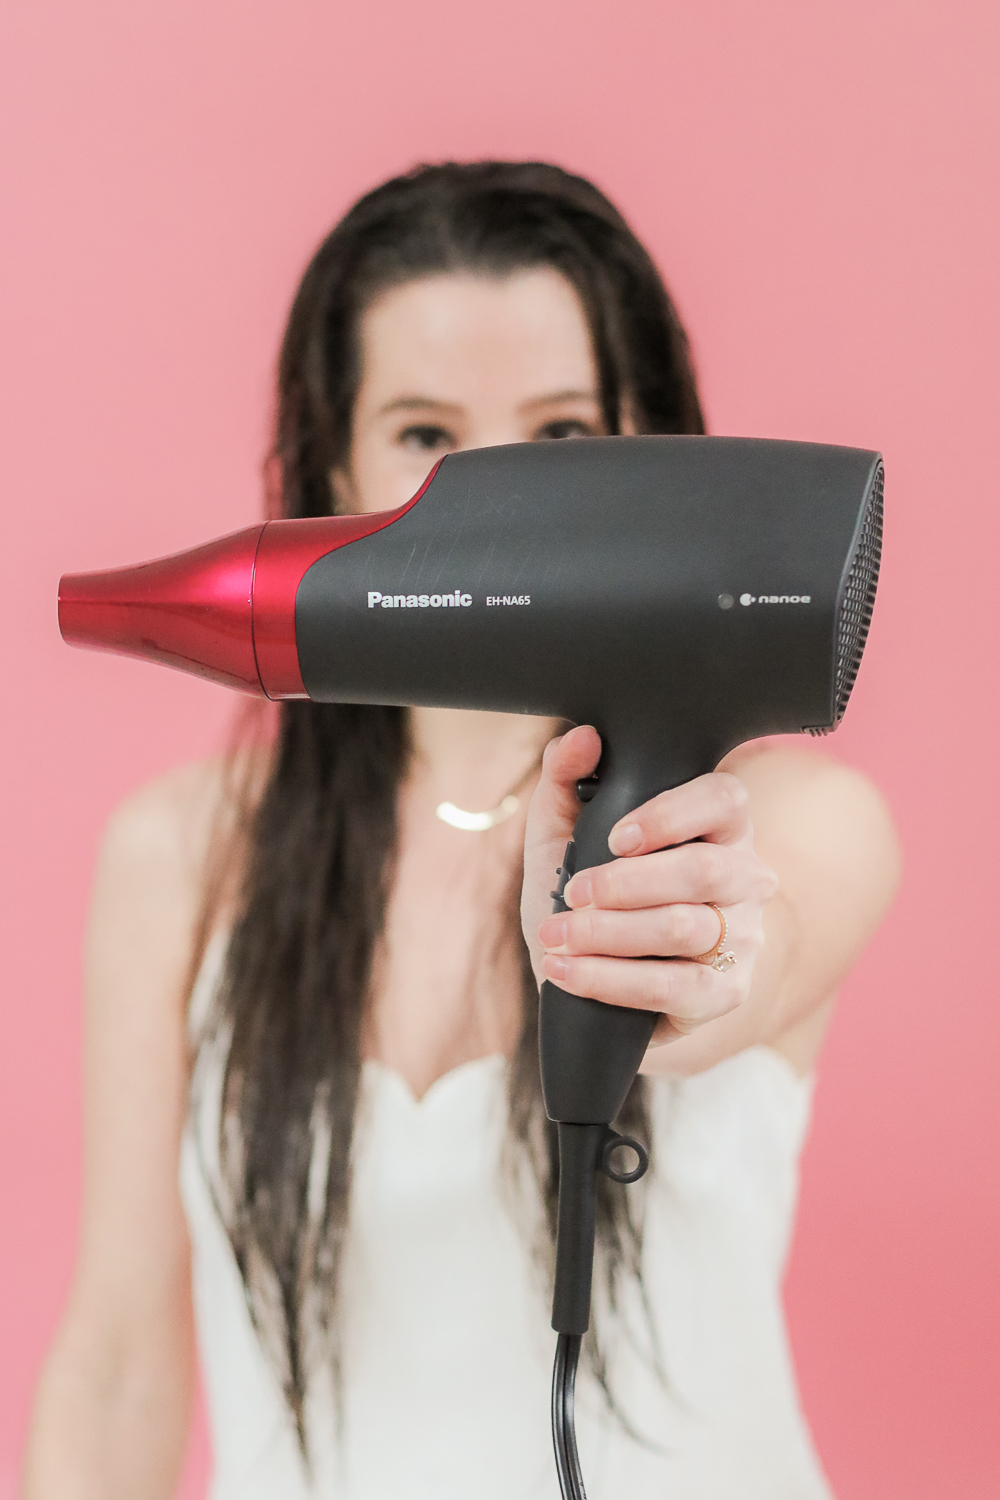 panasonic nanoe hair dryer, panasonic nanoe blow dryer review, popular beauty blogger Stephanie Ziajka, popular beauty blog Diary of a Debutante